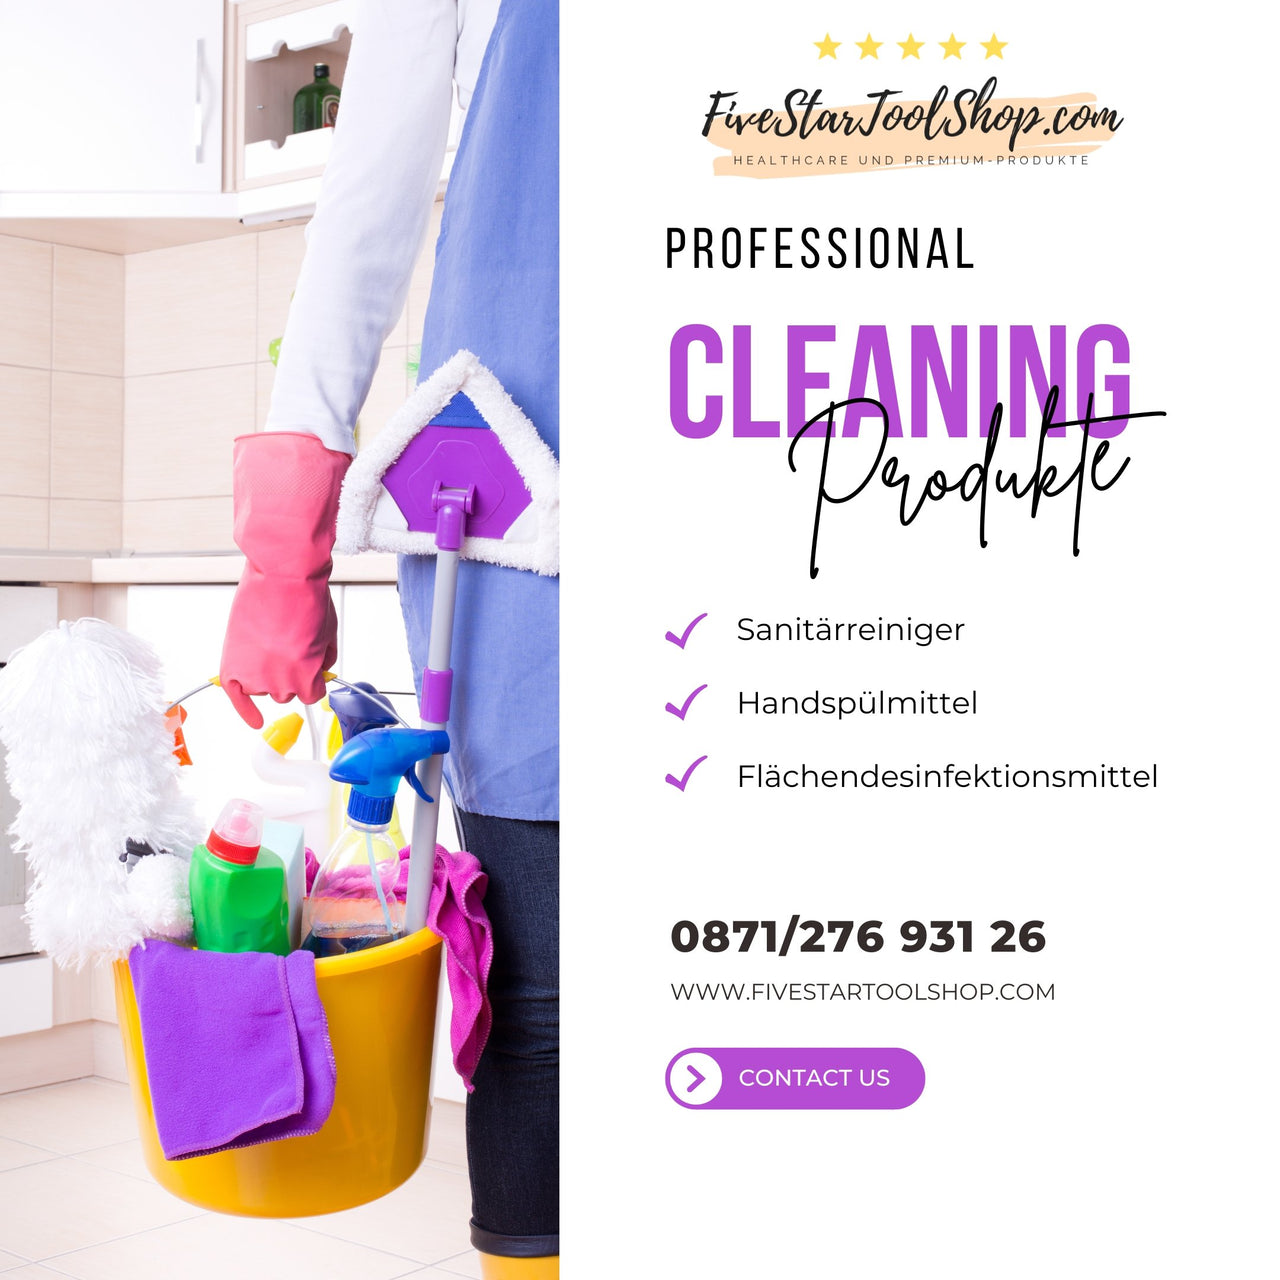 Professionelle Cleaning Produkte - fivestartoolshop.com